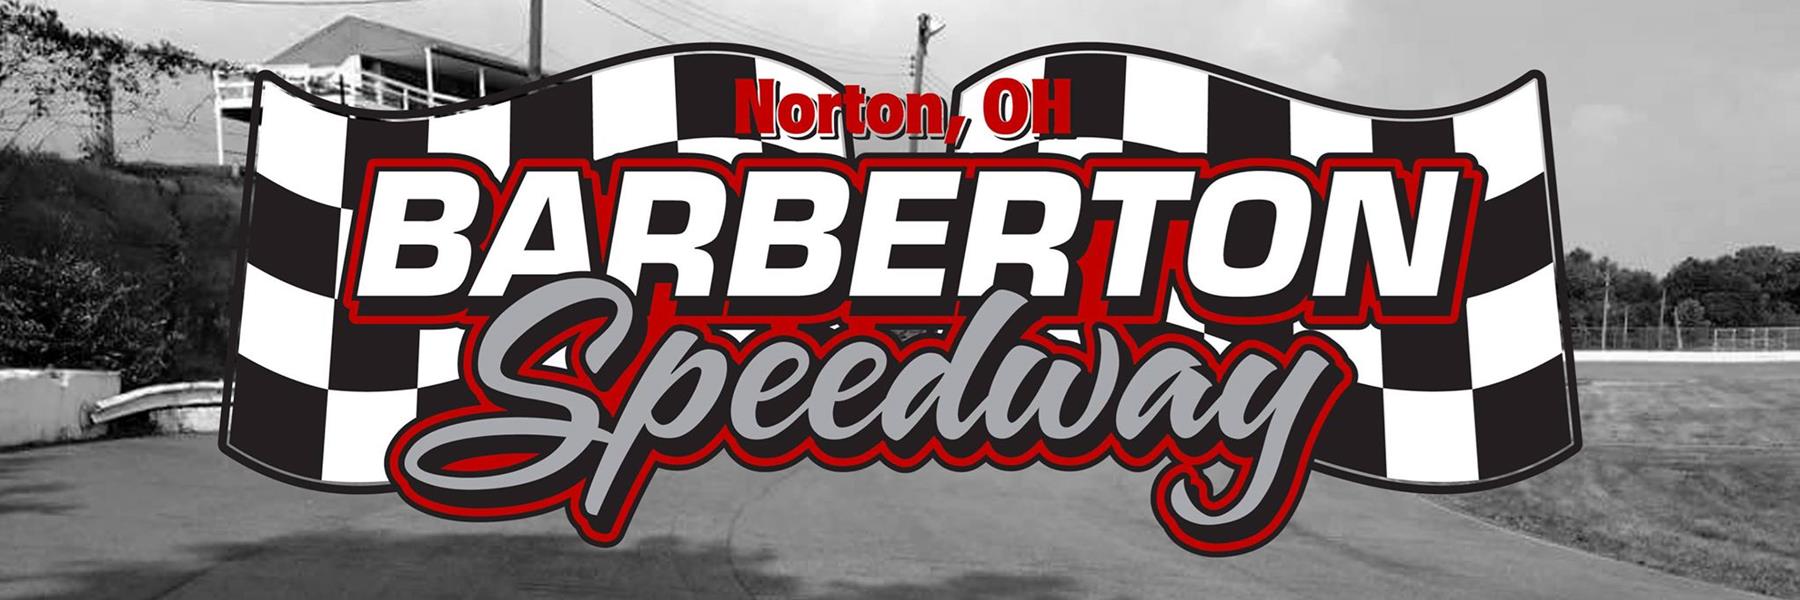 6/12/2021 - Barberton Speedway